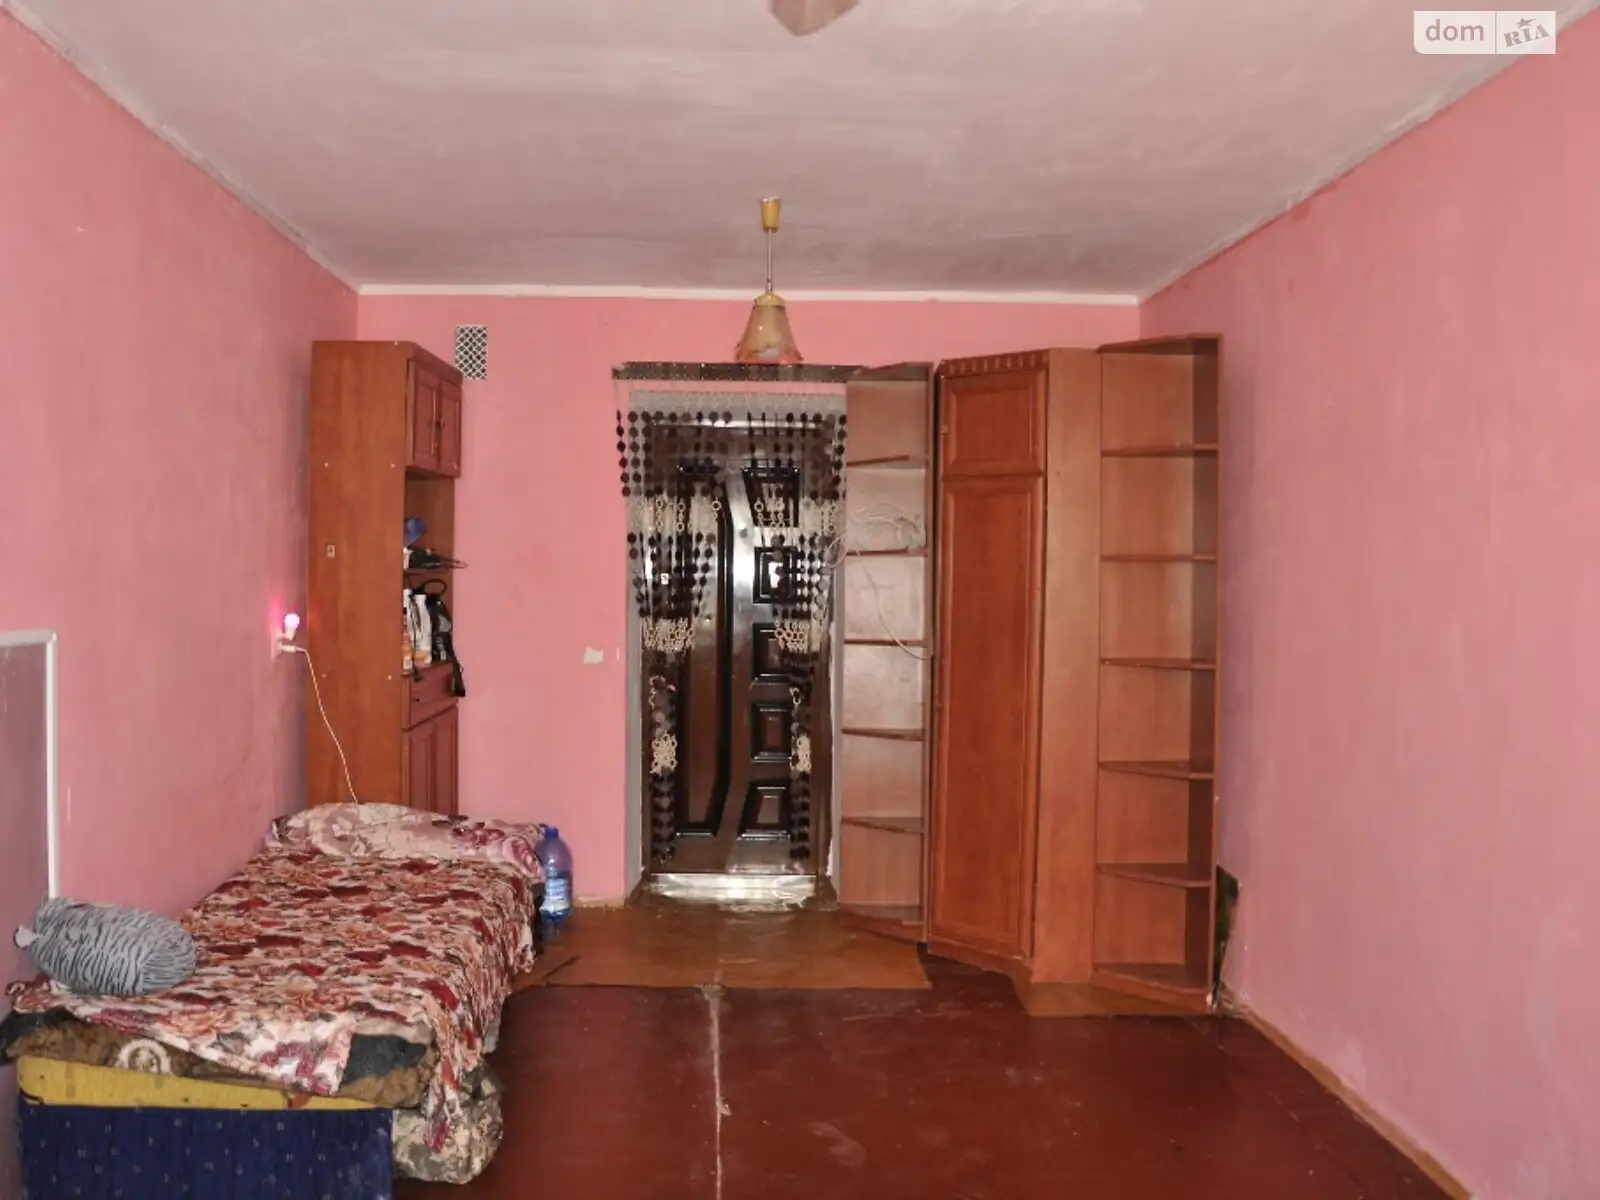 Продается комната 18 кв. м в Тернополе, цена: 10500 $